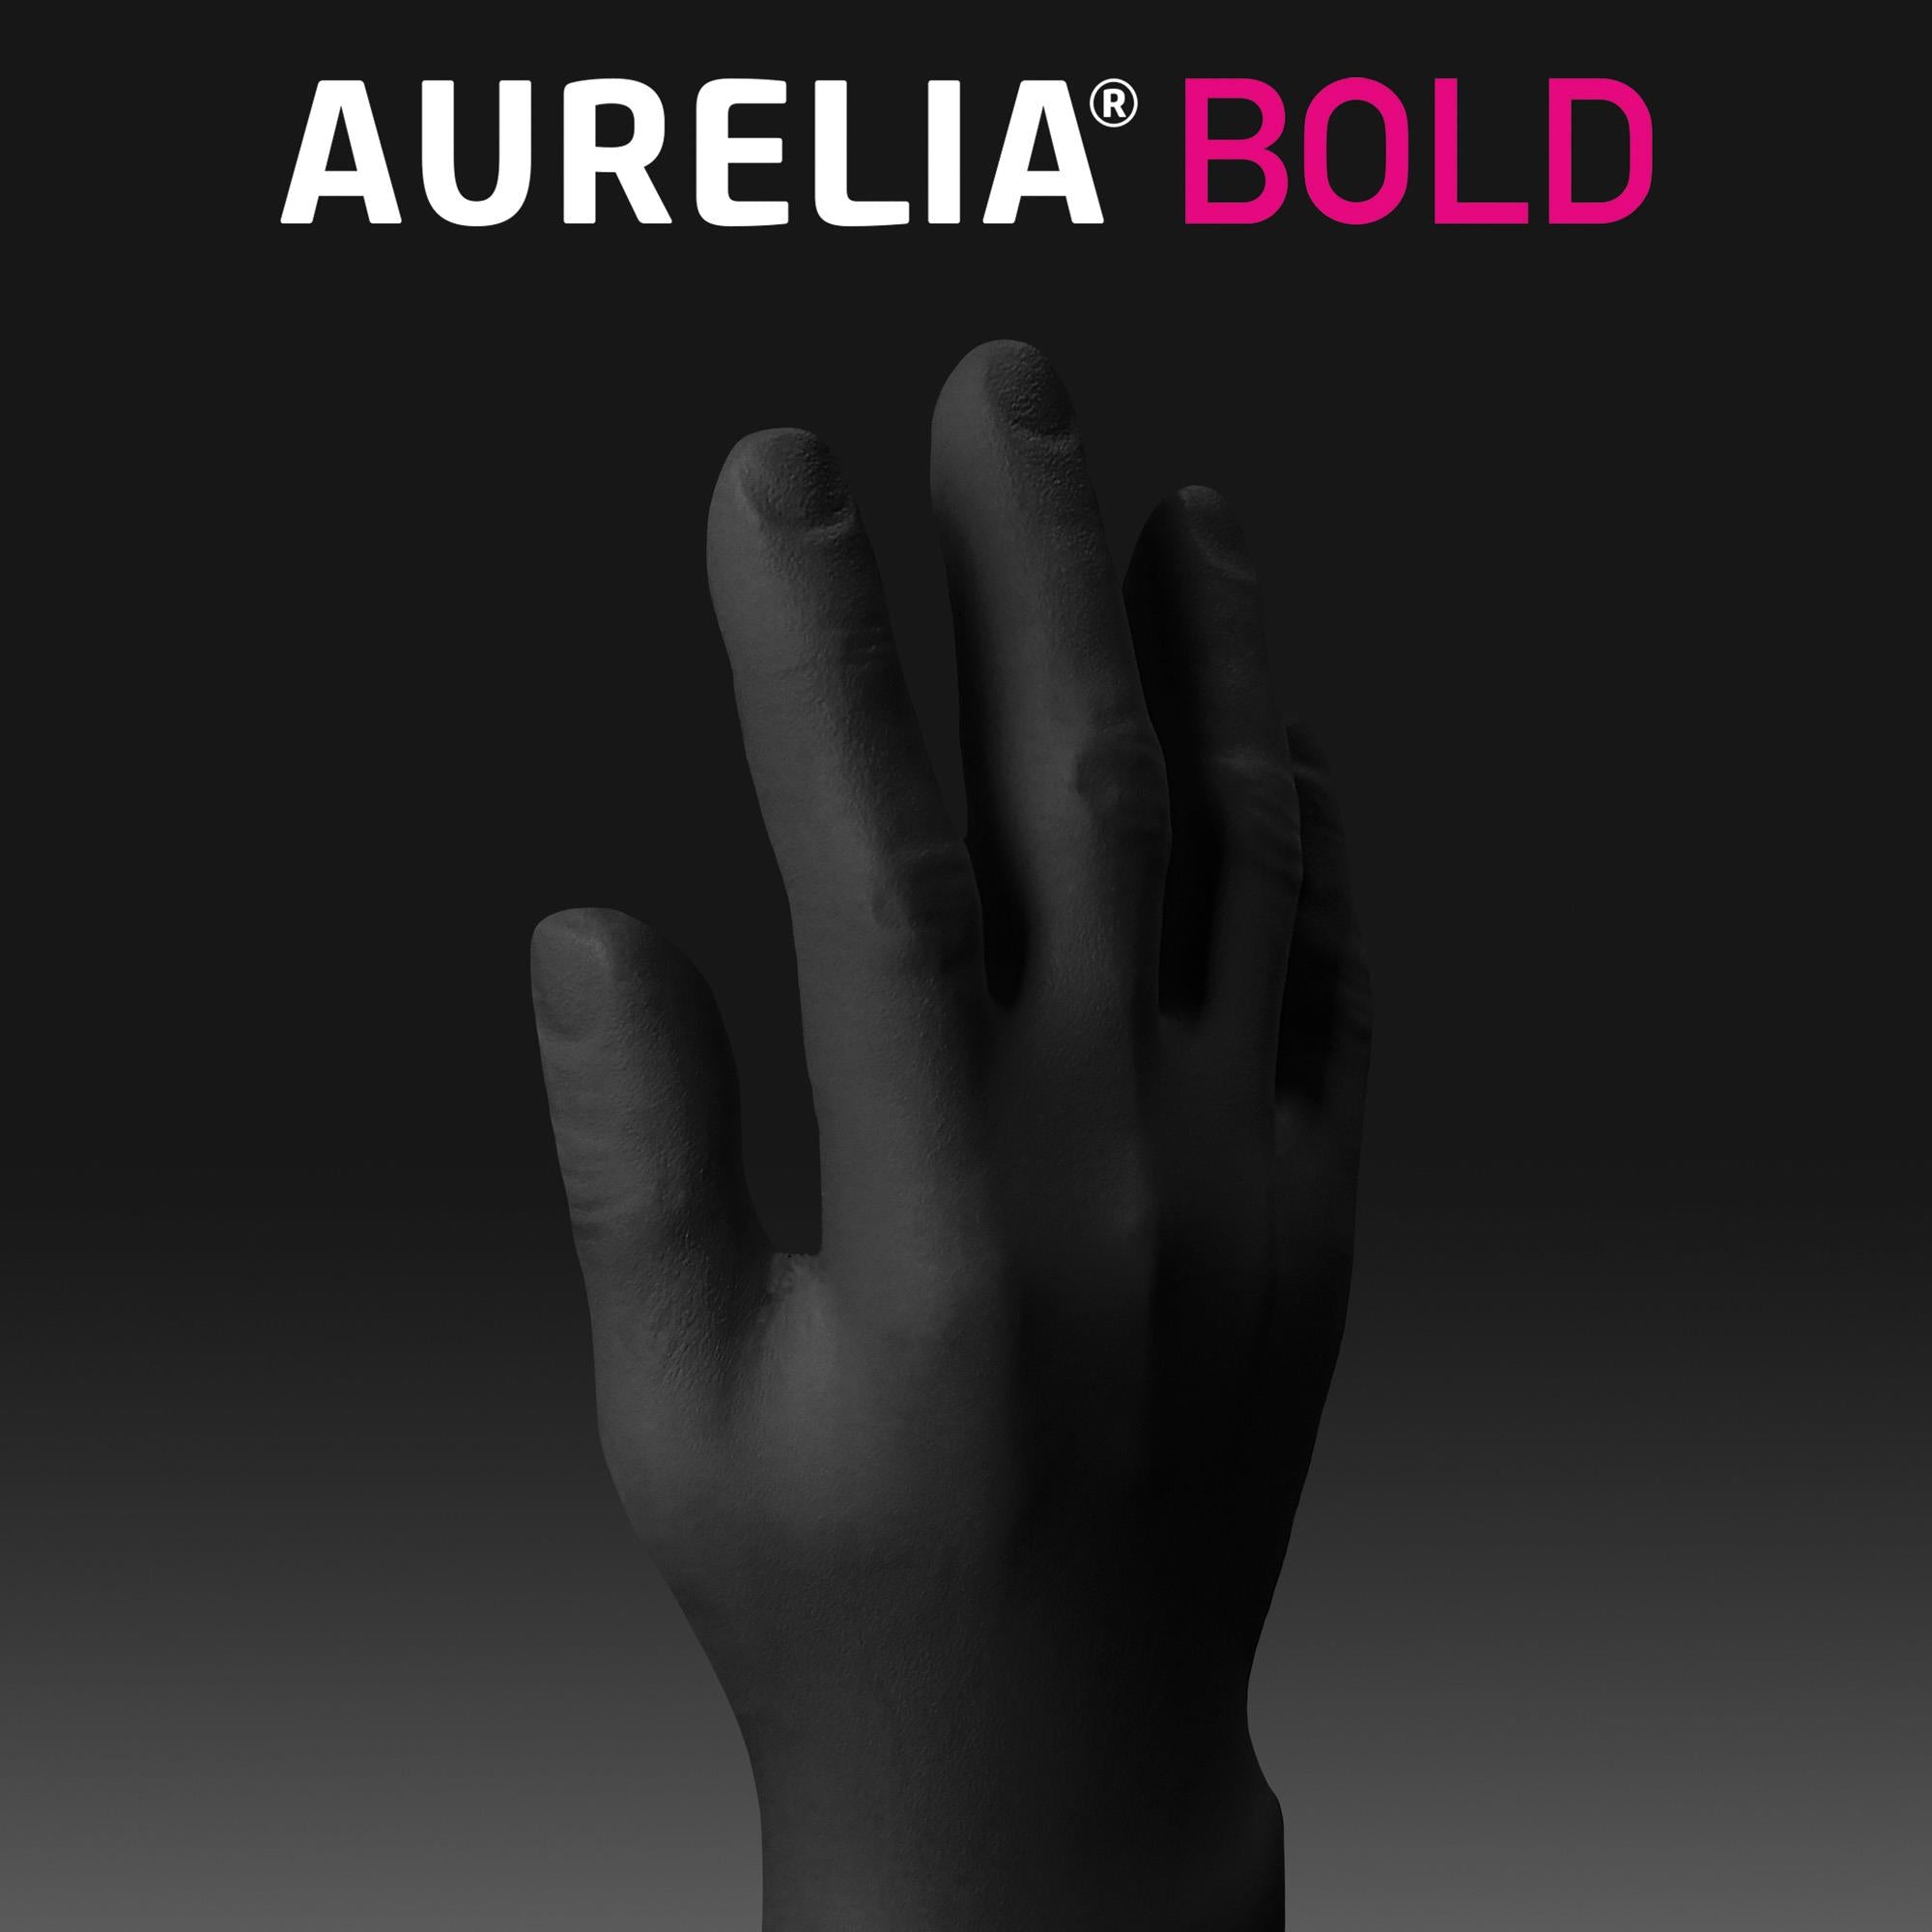 Aurelia Bold black nitrile examination gloves (box 100 singles)